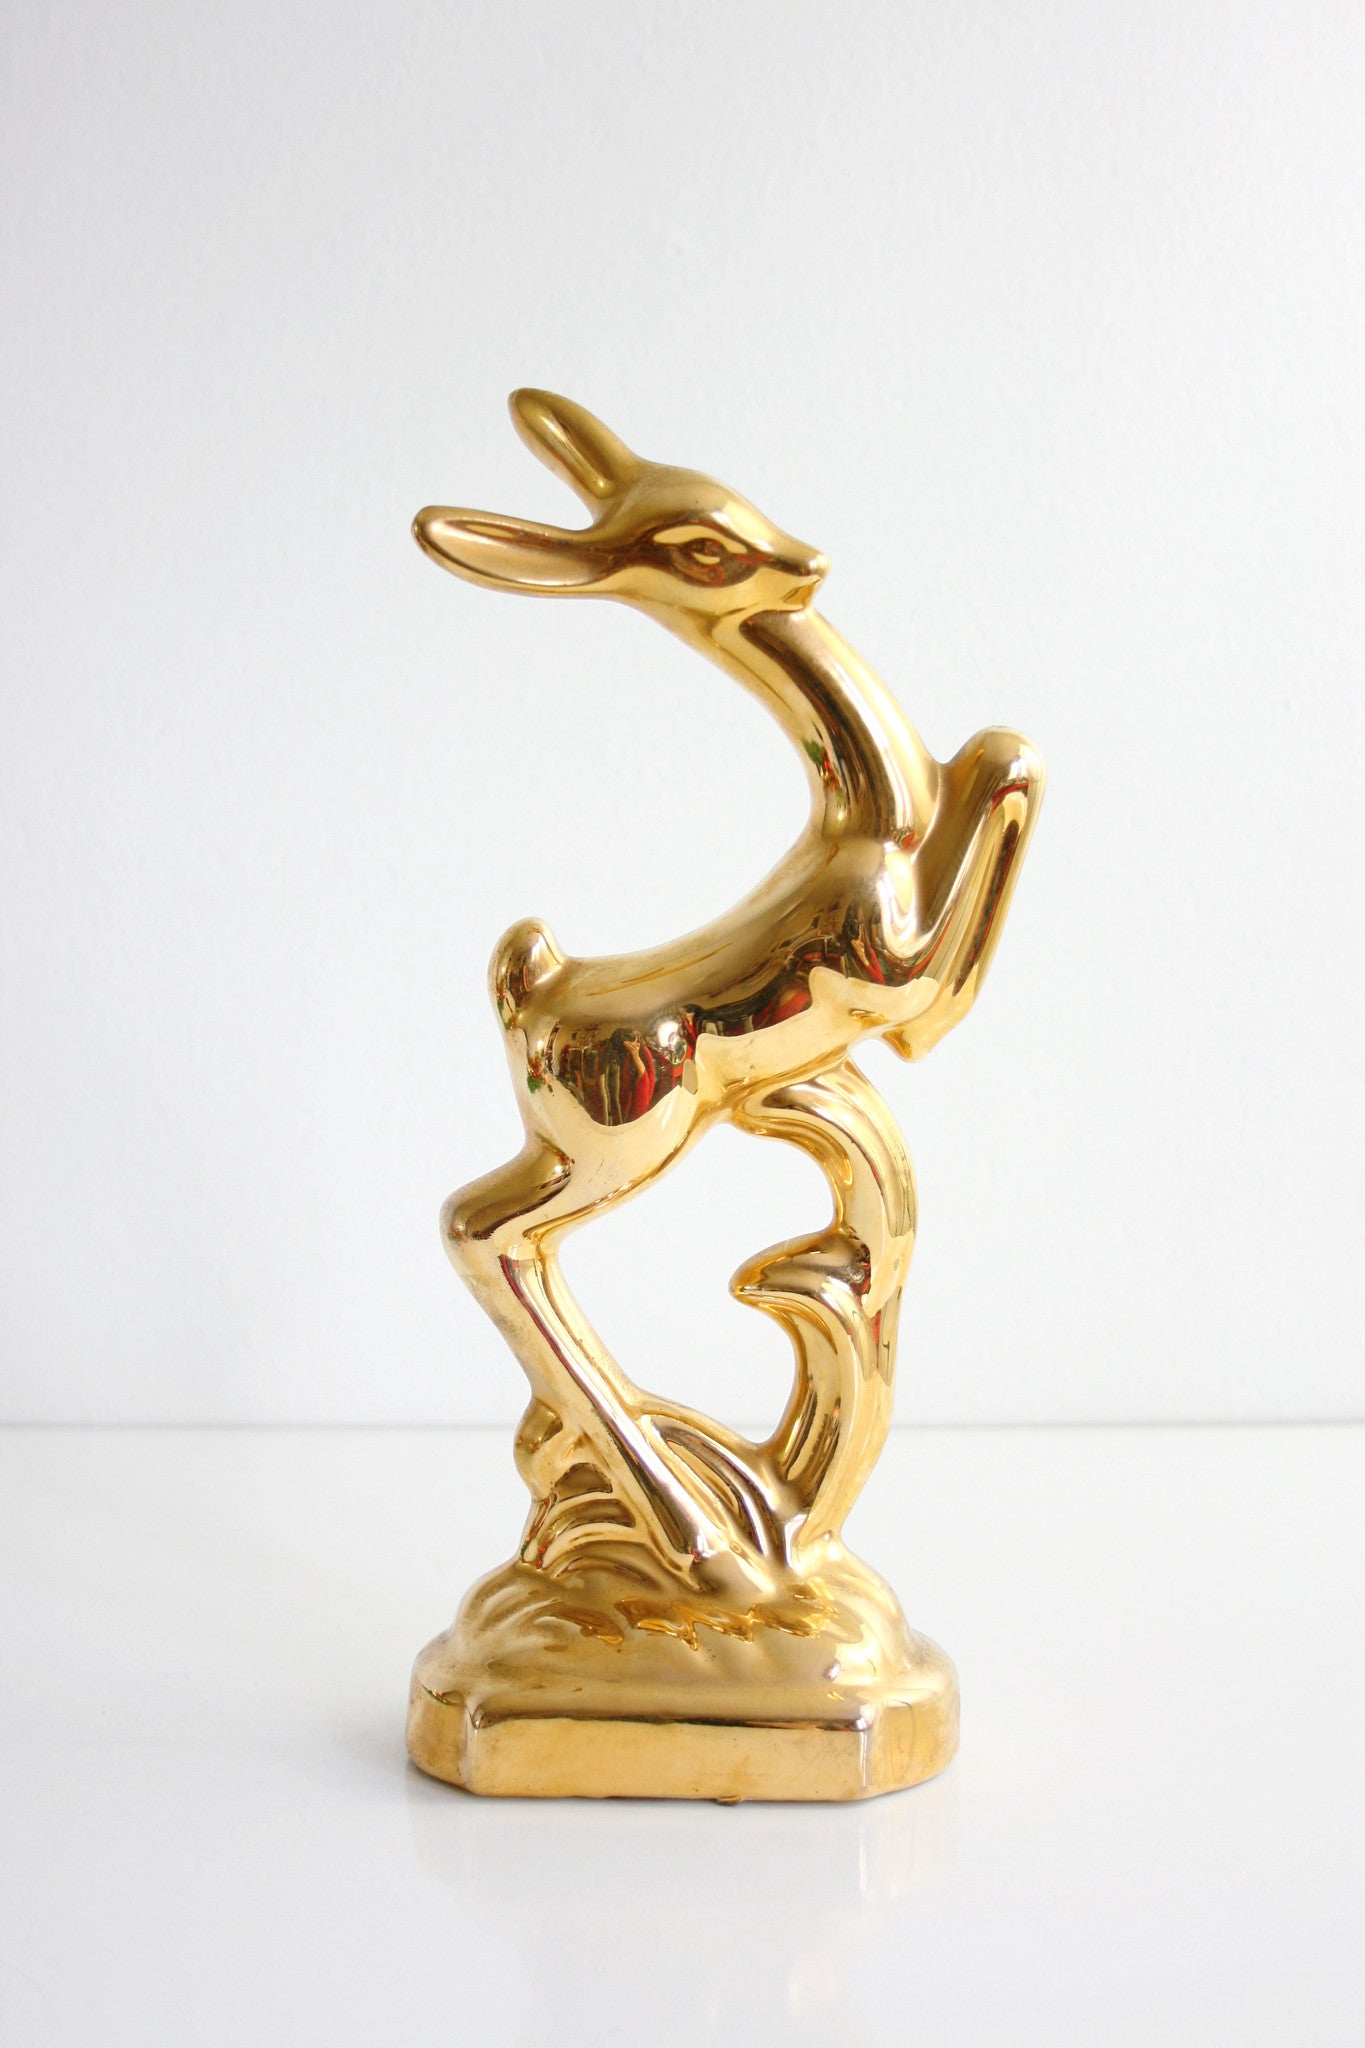 SOLD - Mid Century Modern Gold Ceramic Deer / Art Deco Deer Figurine